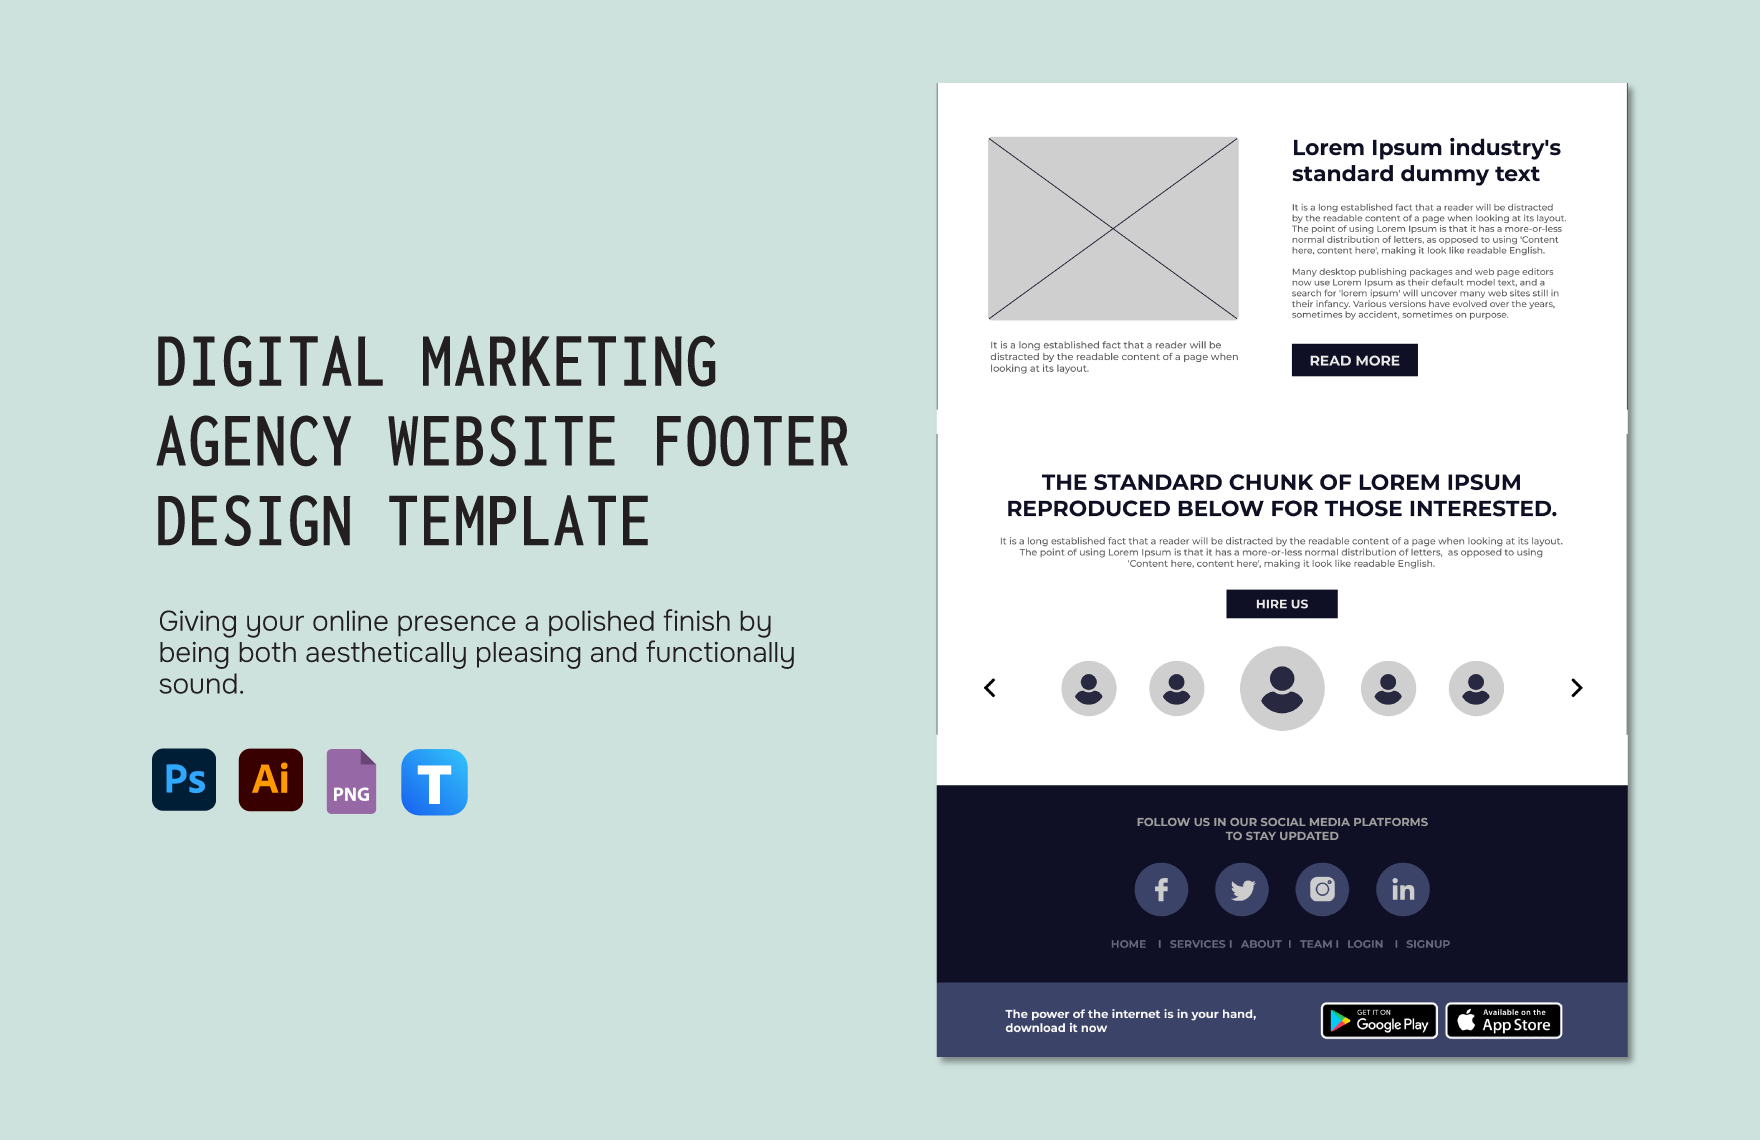 Digital Marketing Agency Website Footer Design Template in PSD